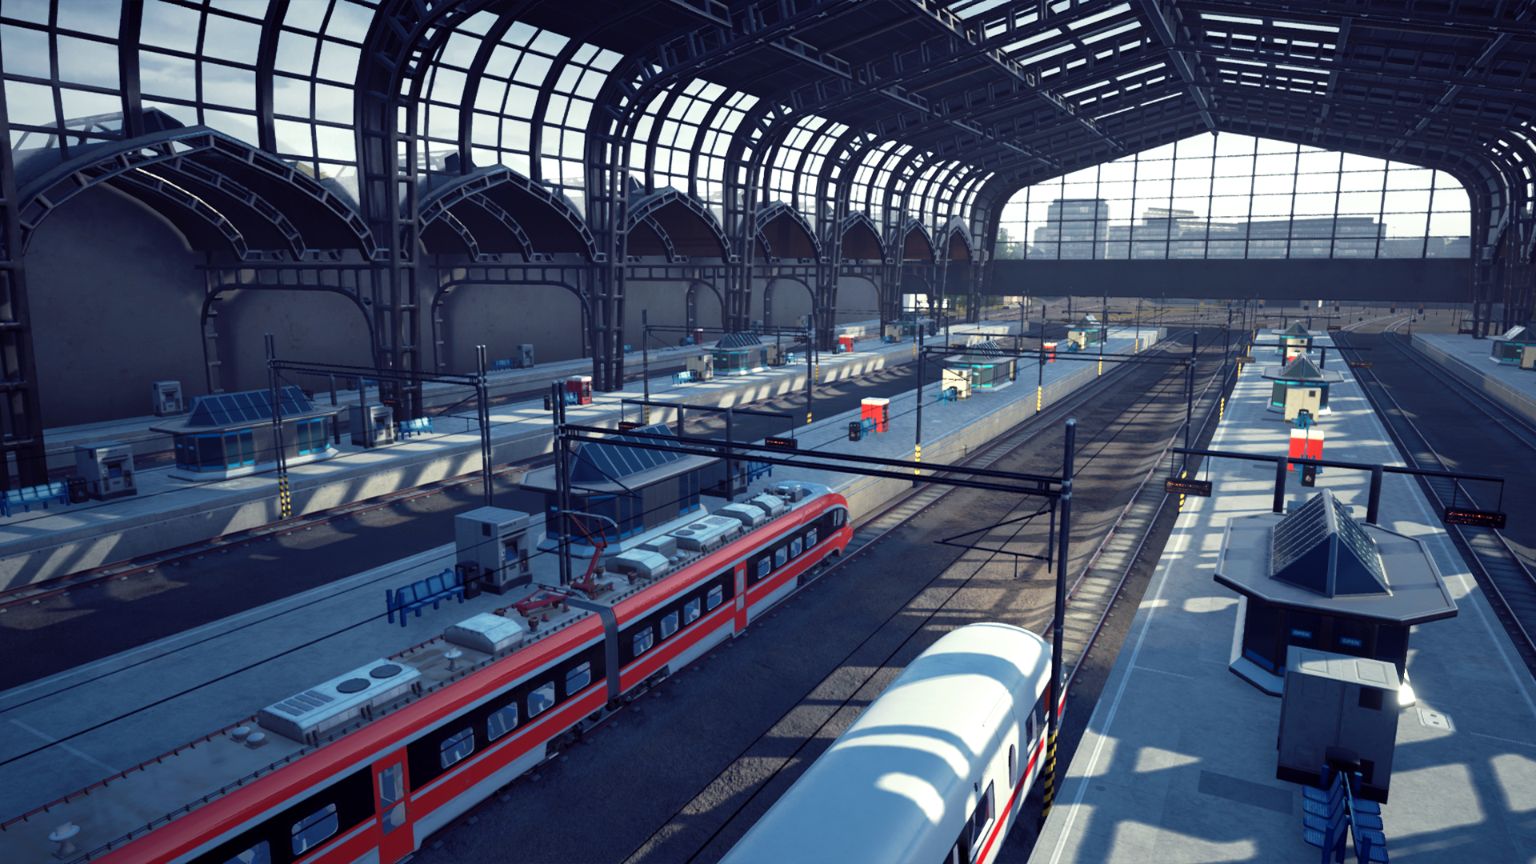 PS5 Train Life - A Railway Simulator